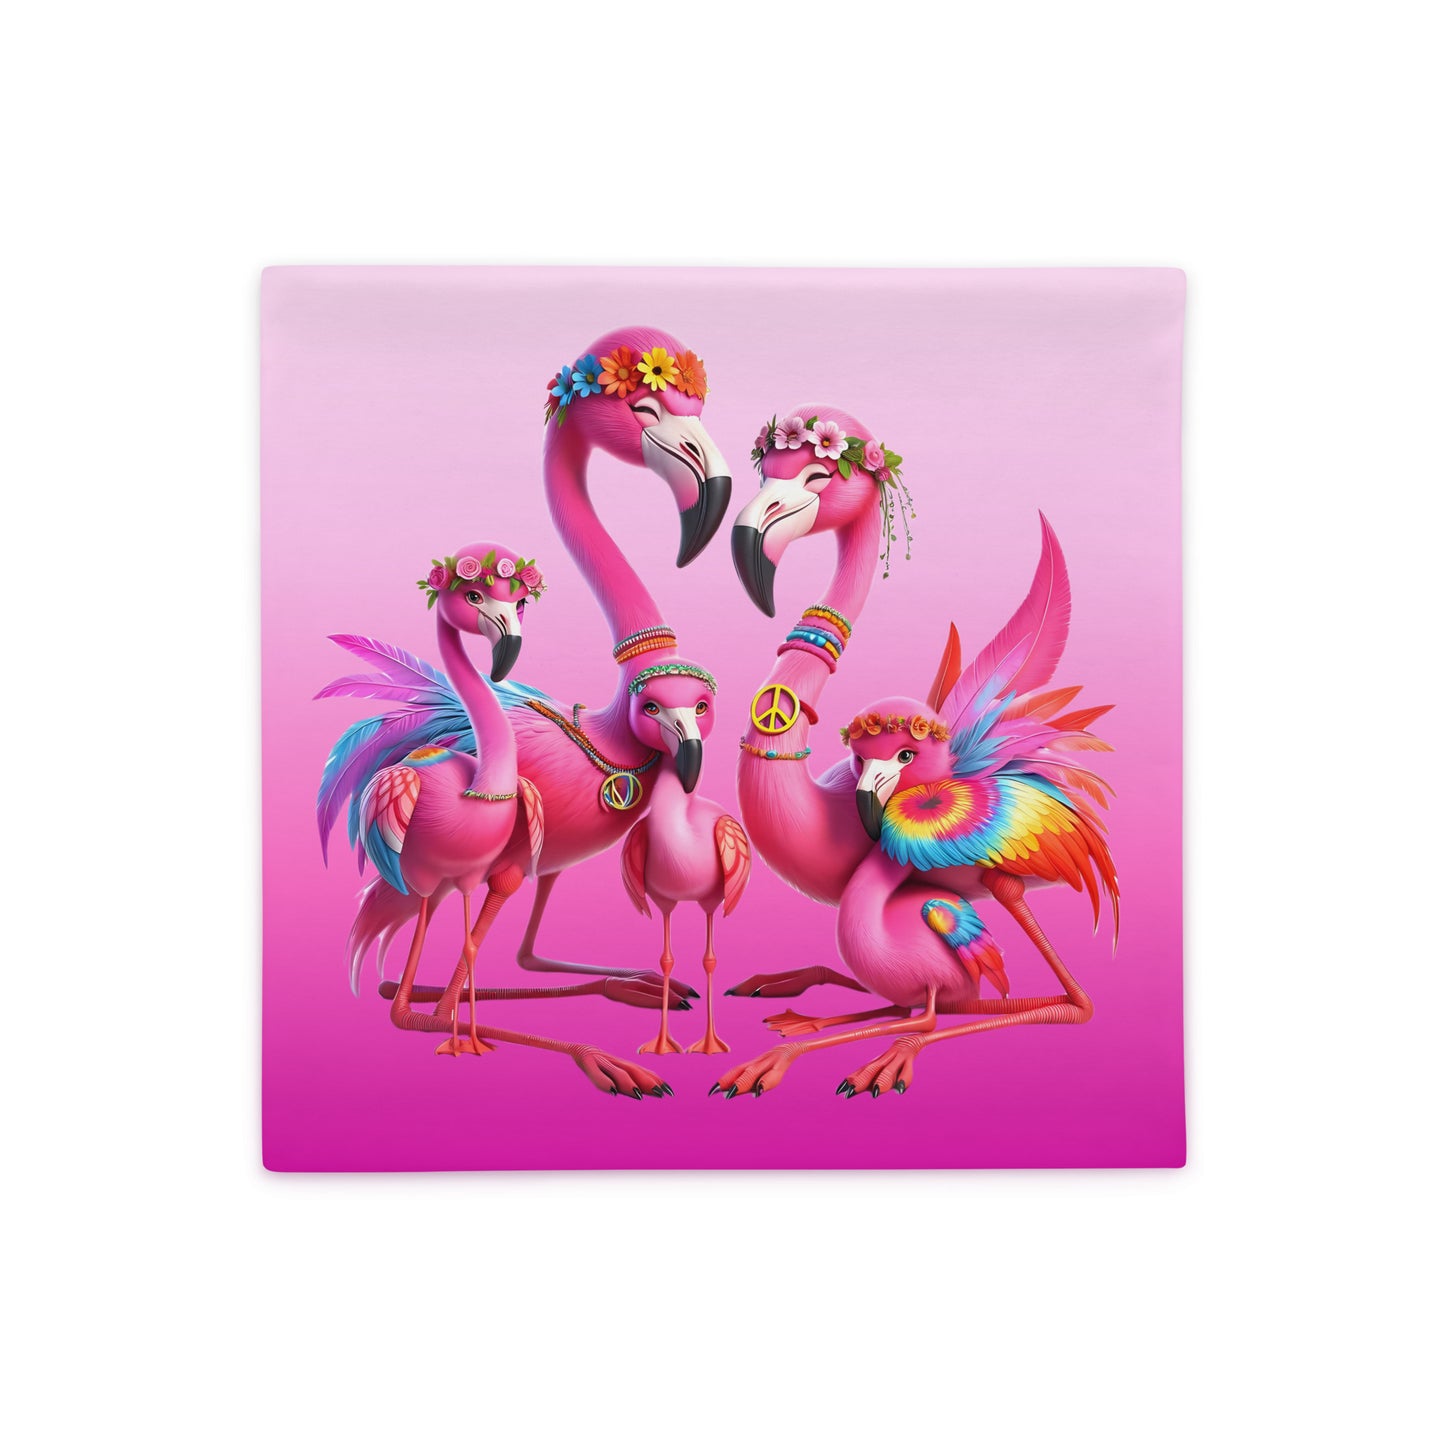 Hippie Flamingo Flock Pillow Cover